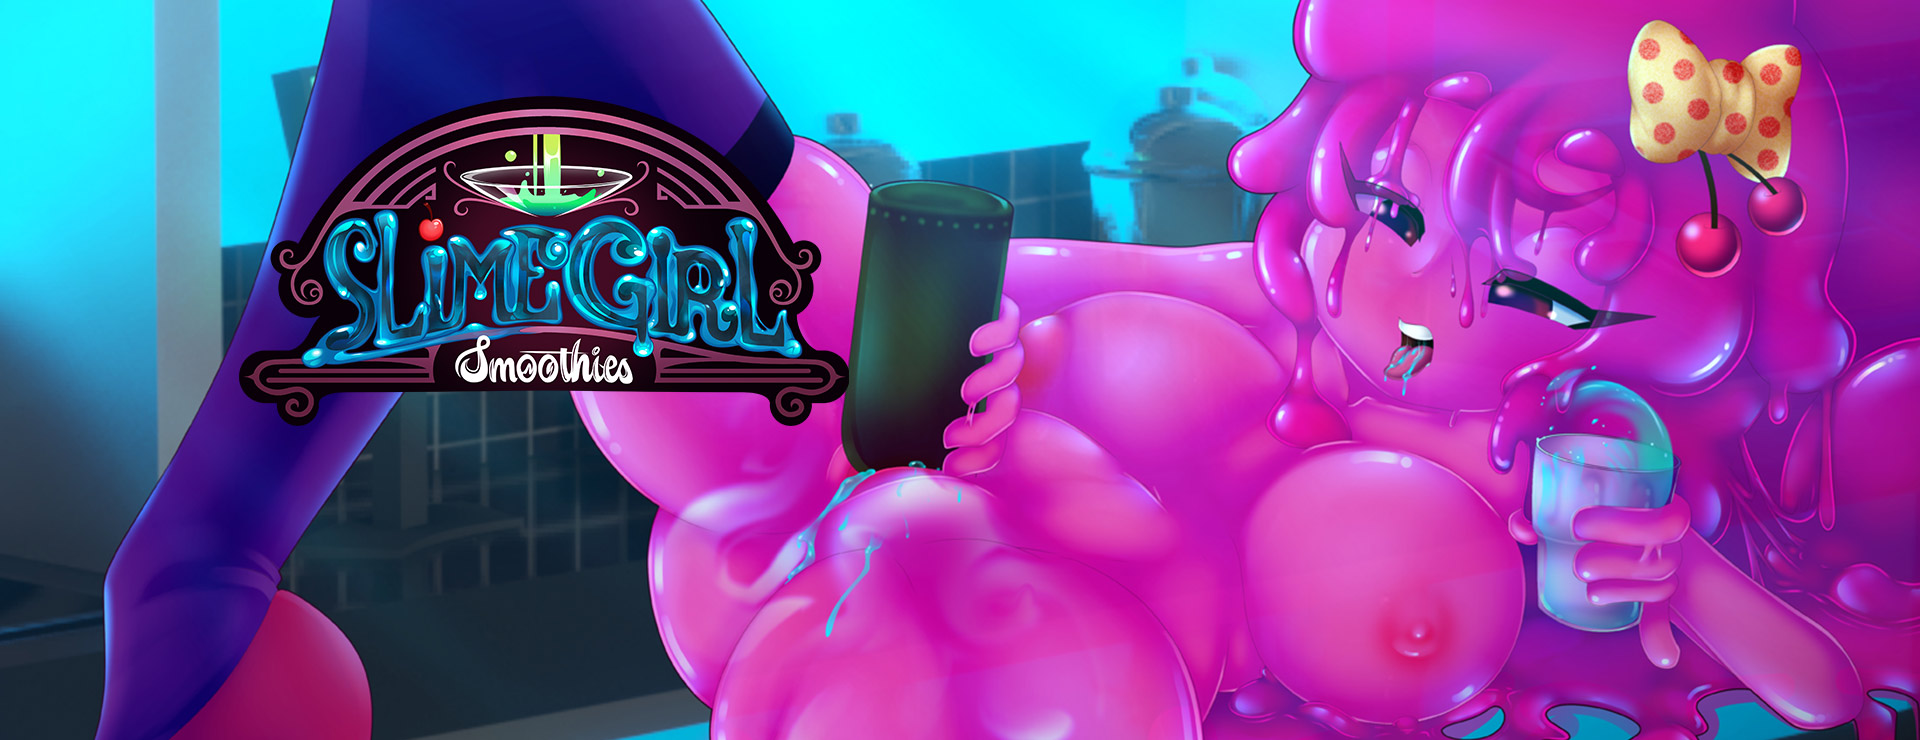 Slime Girl Smoothies - カジュアル ゲーム